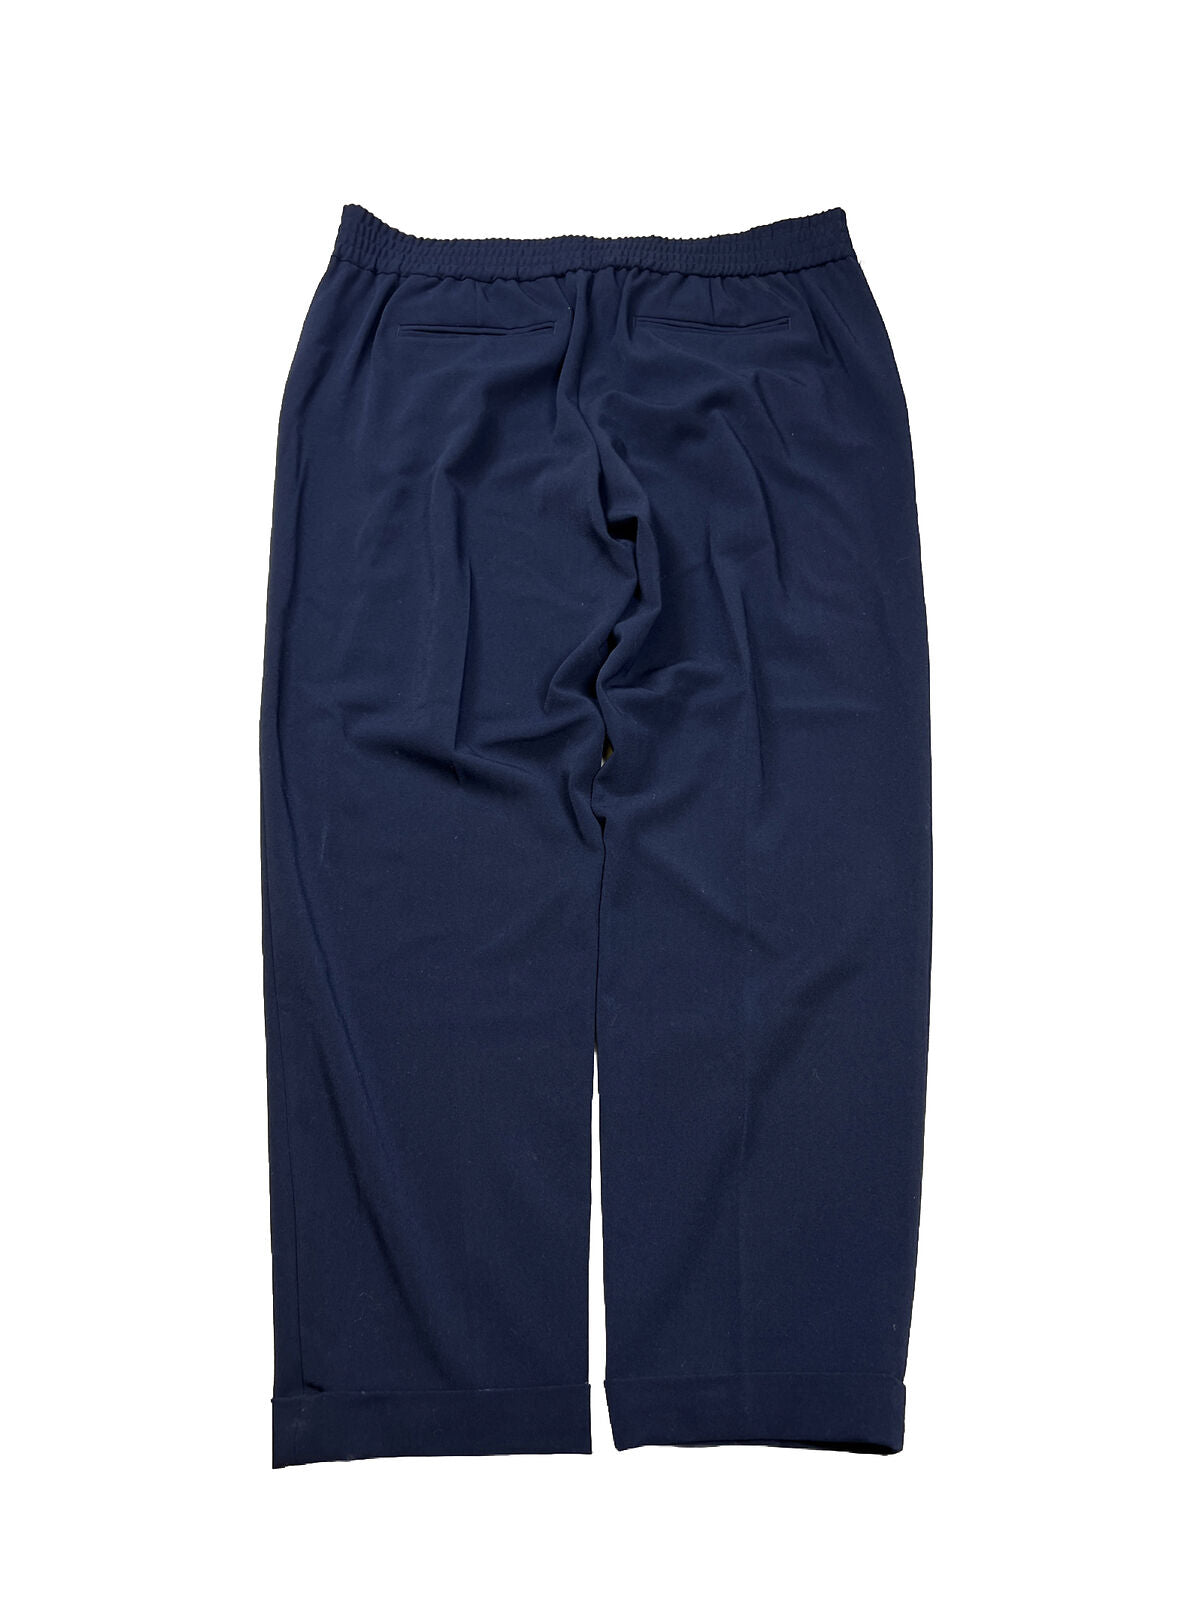 NEW LOFT Women's Blue Stretch Waist Marisa Ankle Dress Pants - 8